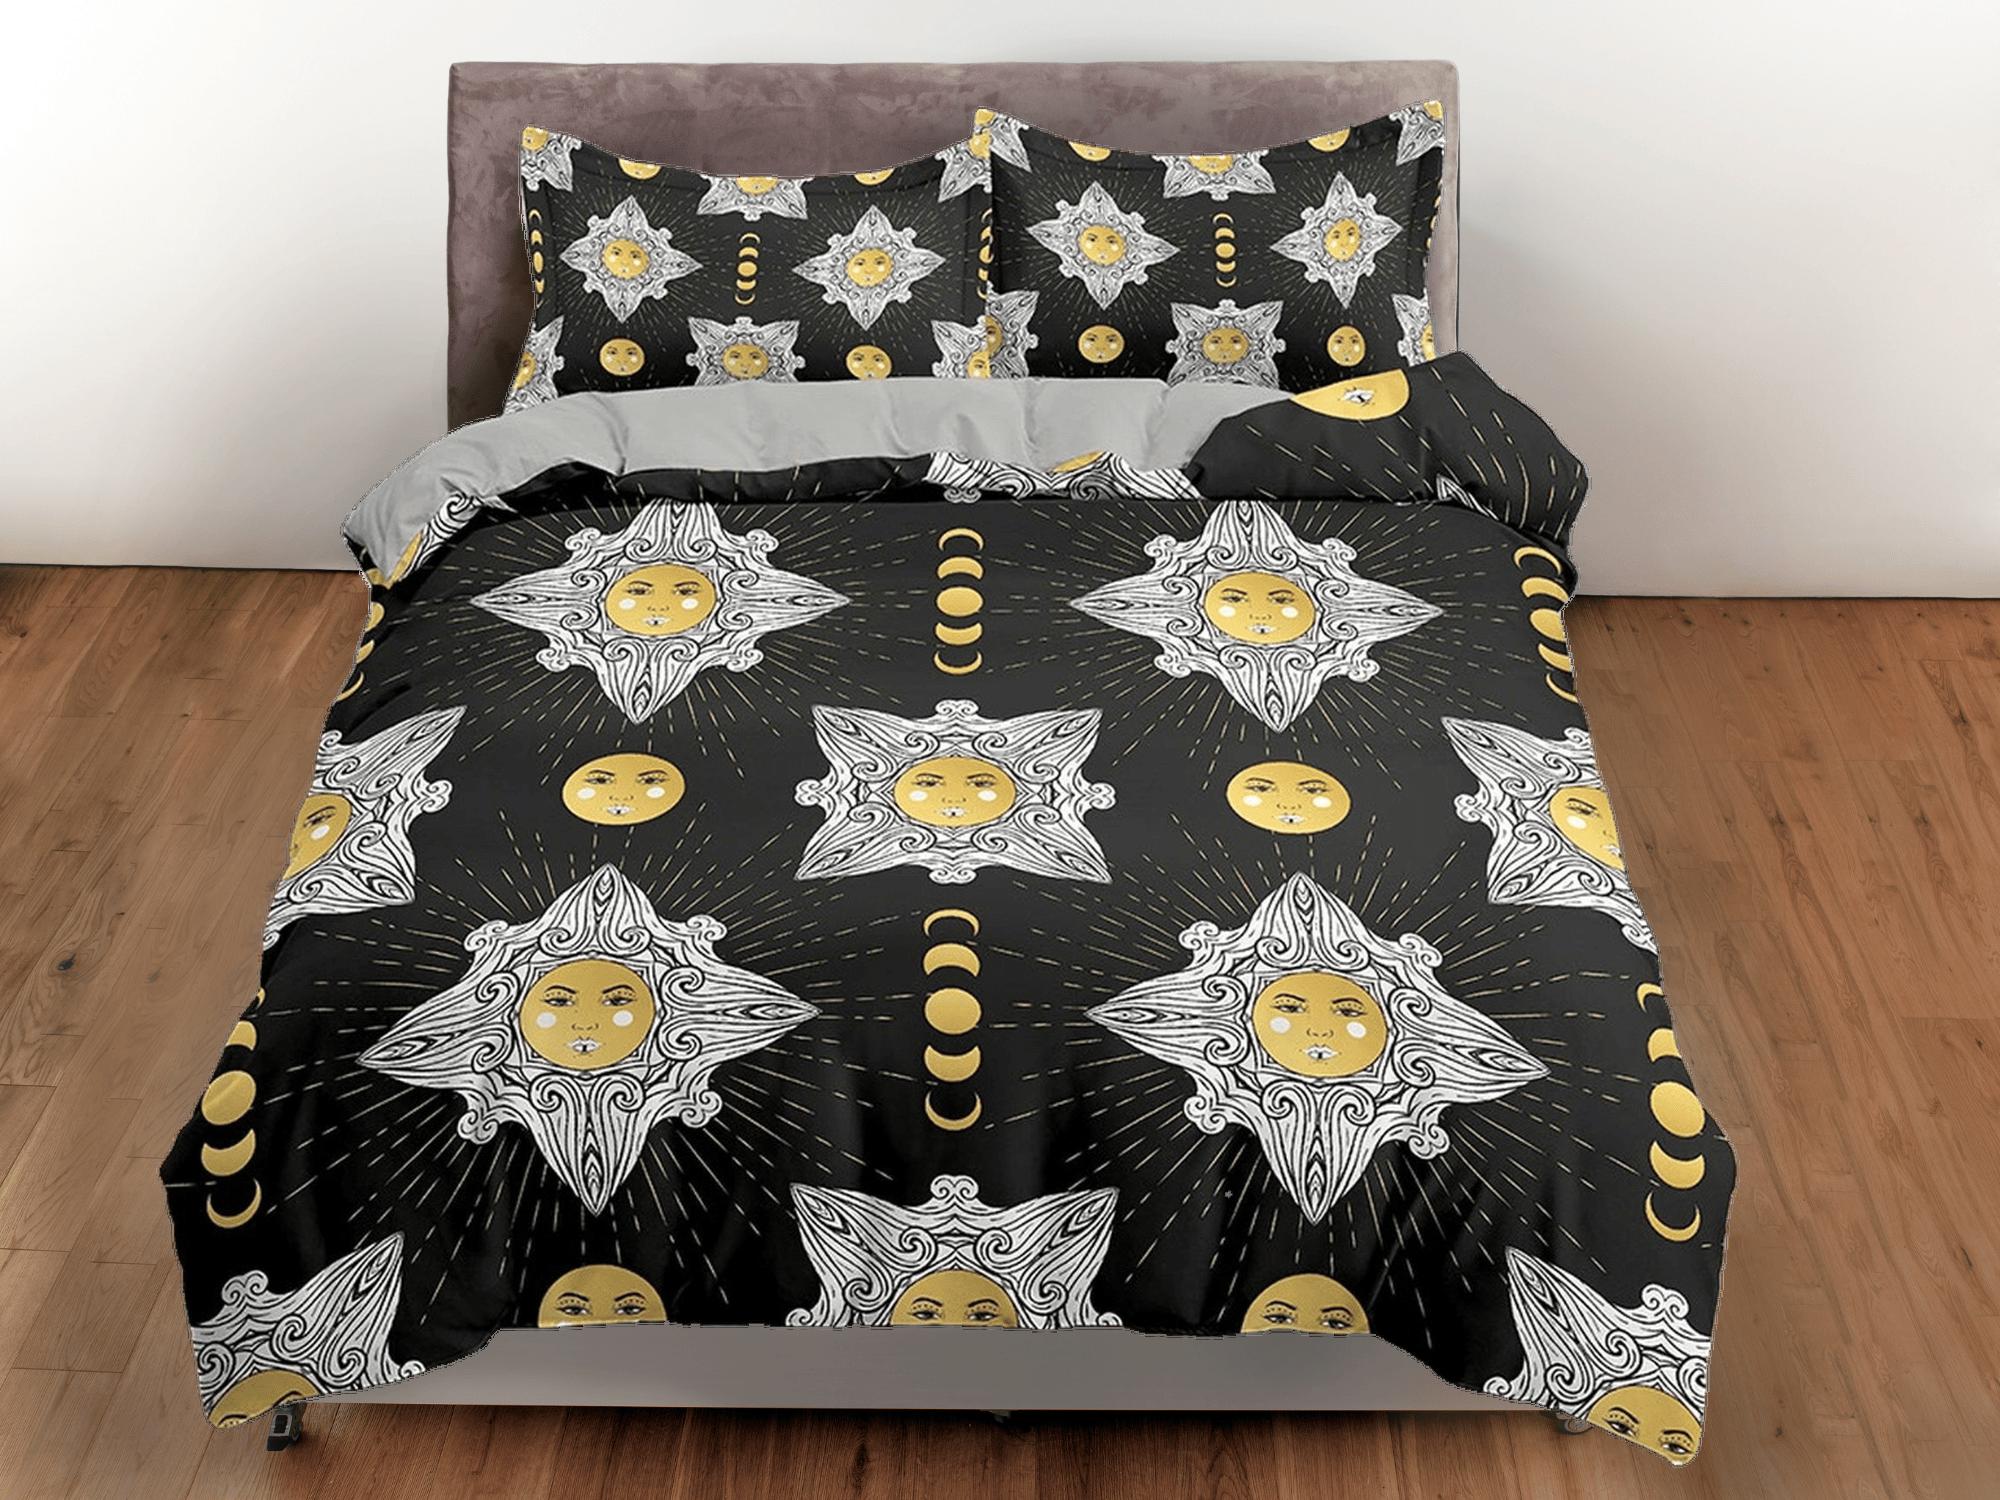 daintyduvet Celestial bedding phases of moon, witchy decor dorm bedding, aesthetic duvet, boho bedding set full king queen, astrology gifts, gothic art